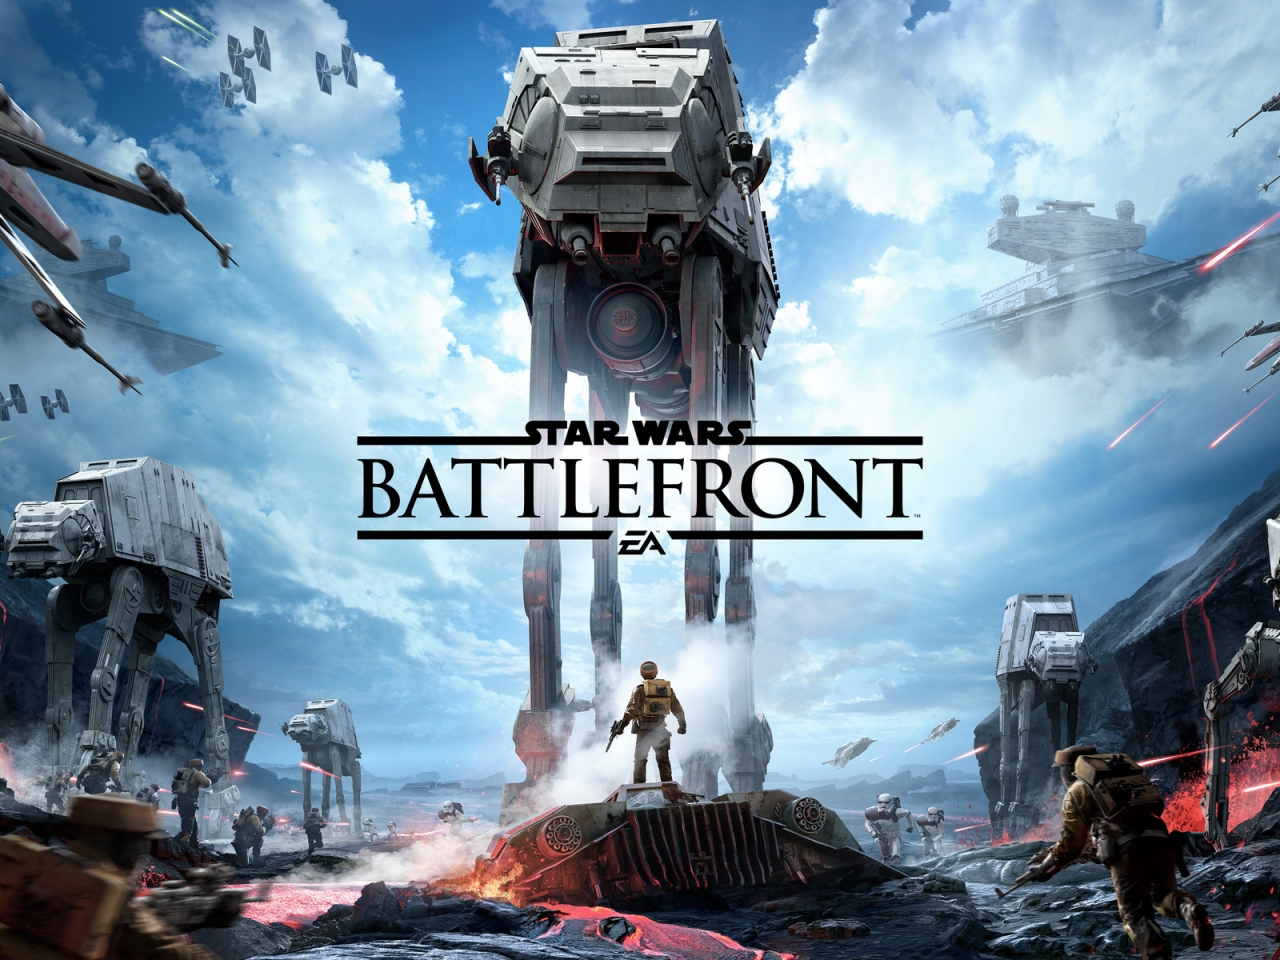 Star Wars Battlefront Poster for 1280 x 960 resolution